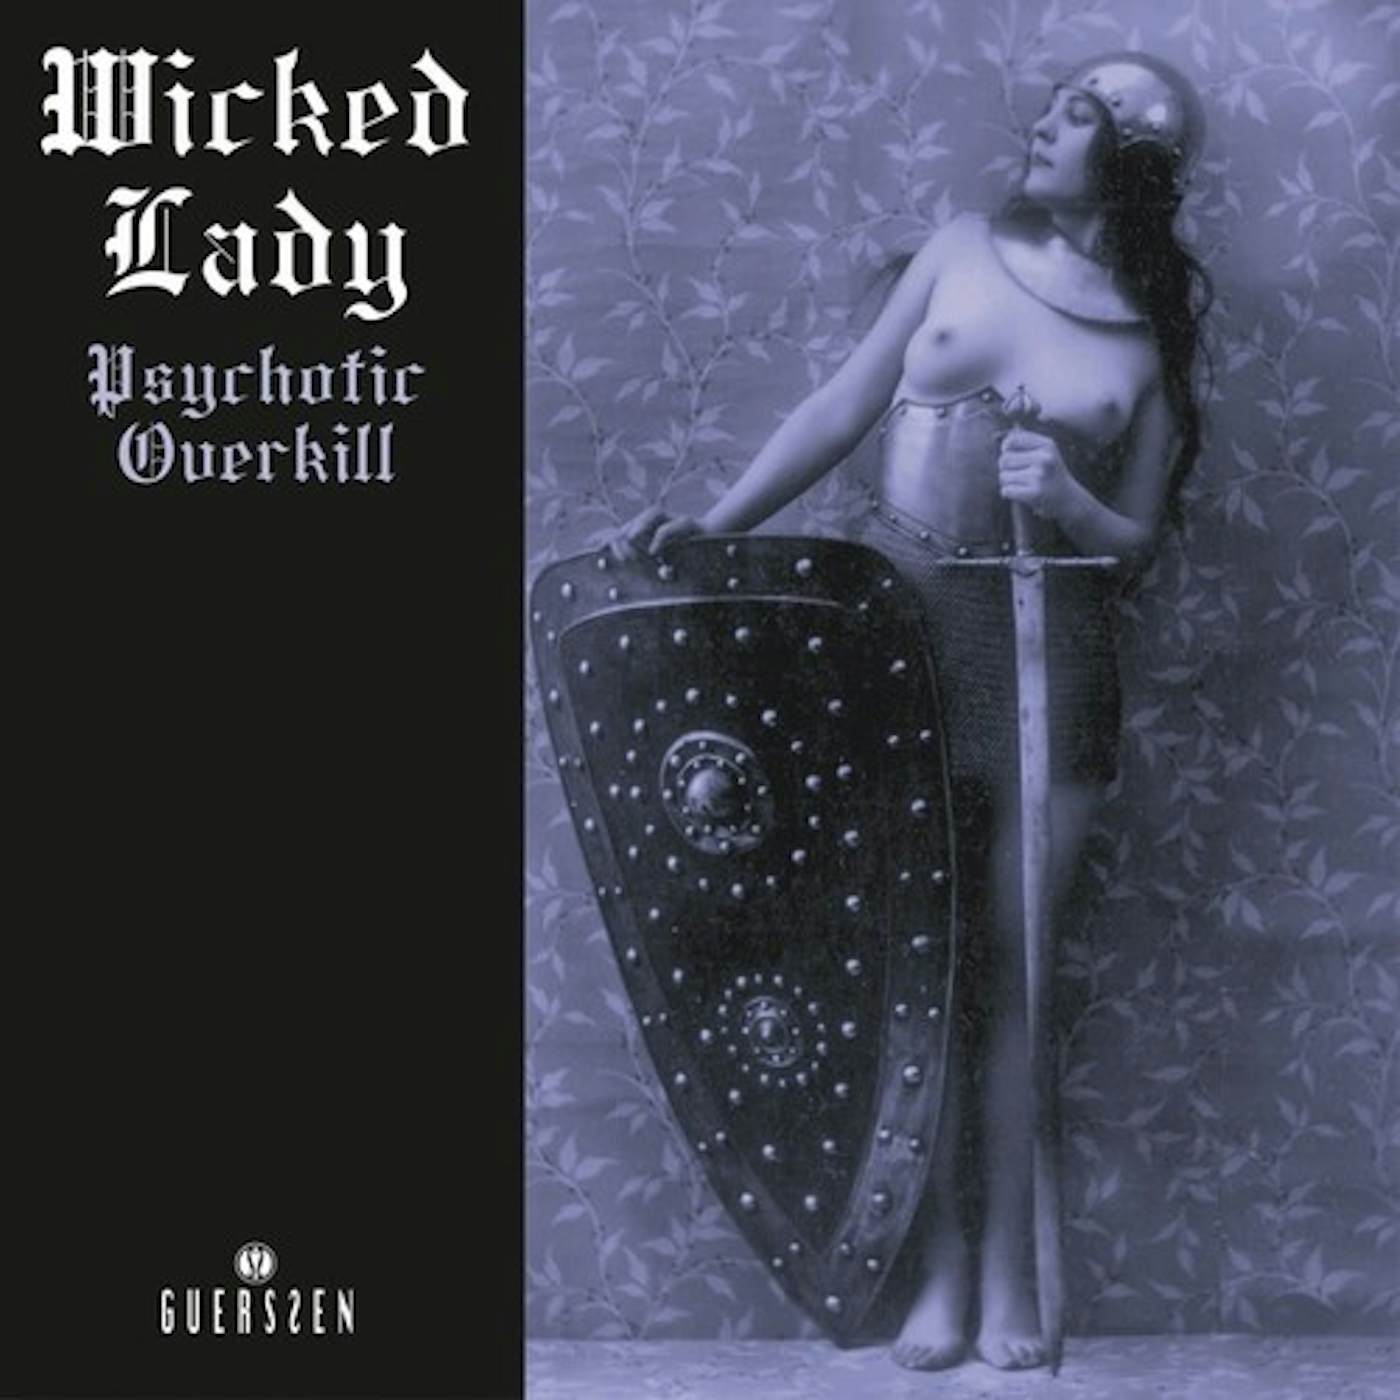 Wicked Lady PSYCHOTIC OVERKILL (2022 REPRESS) Vinyl Record